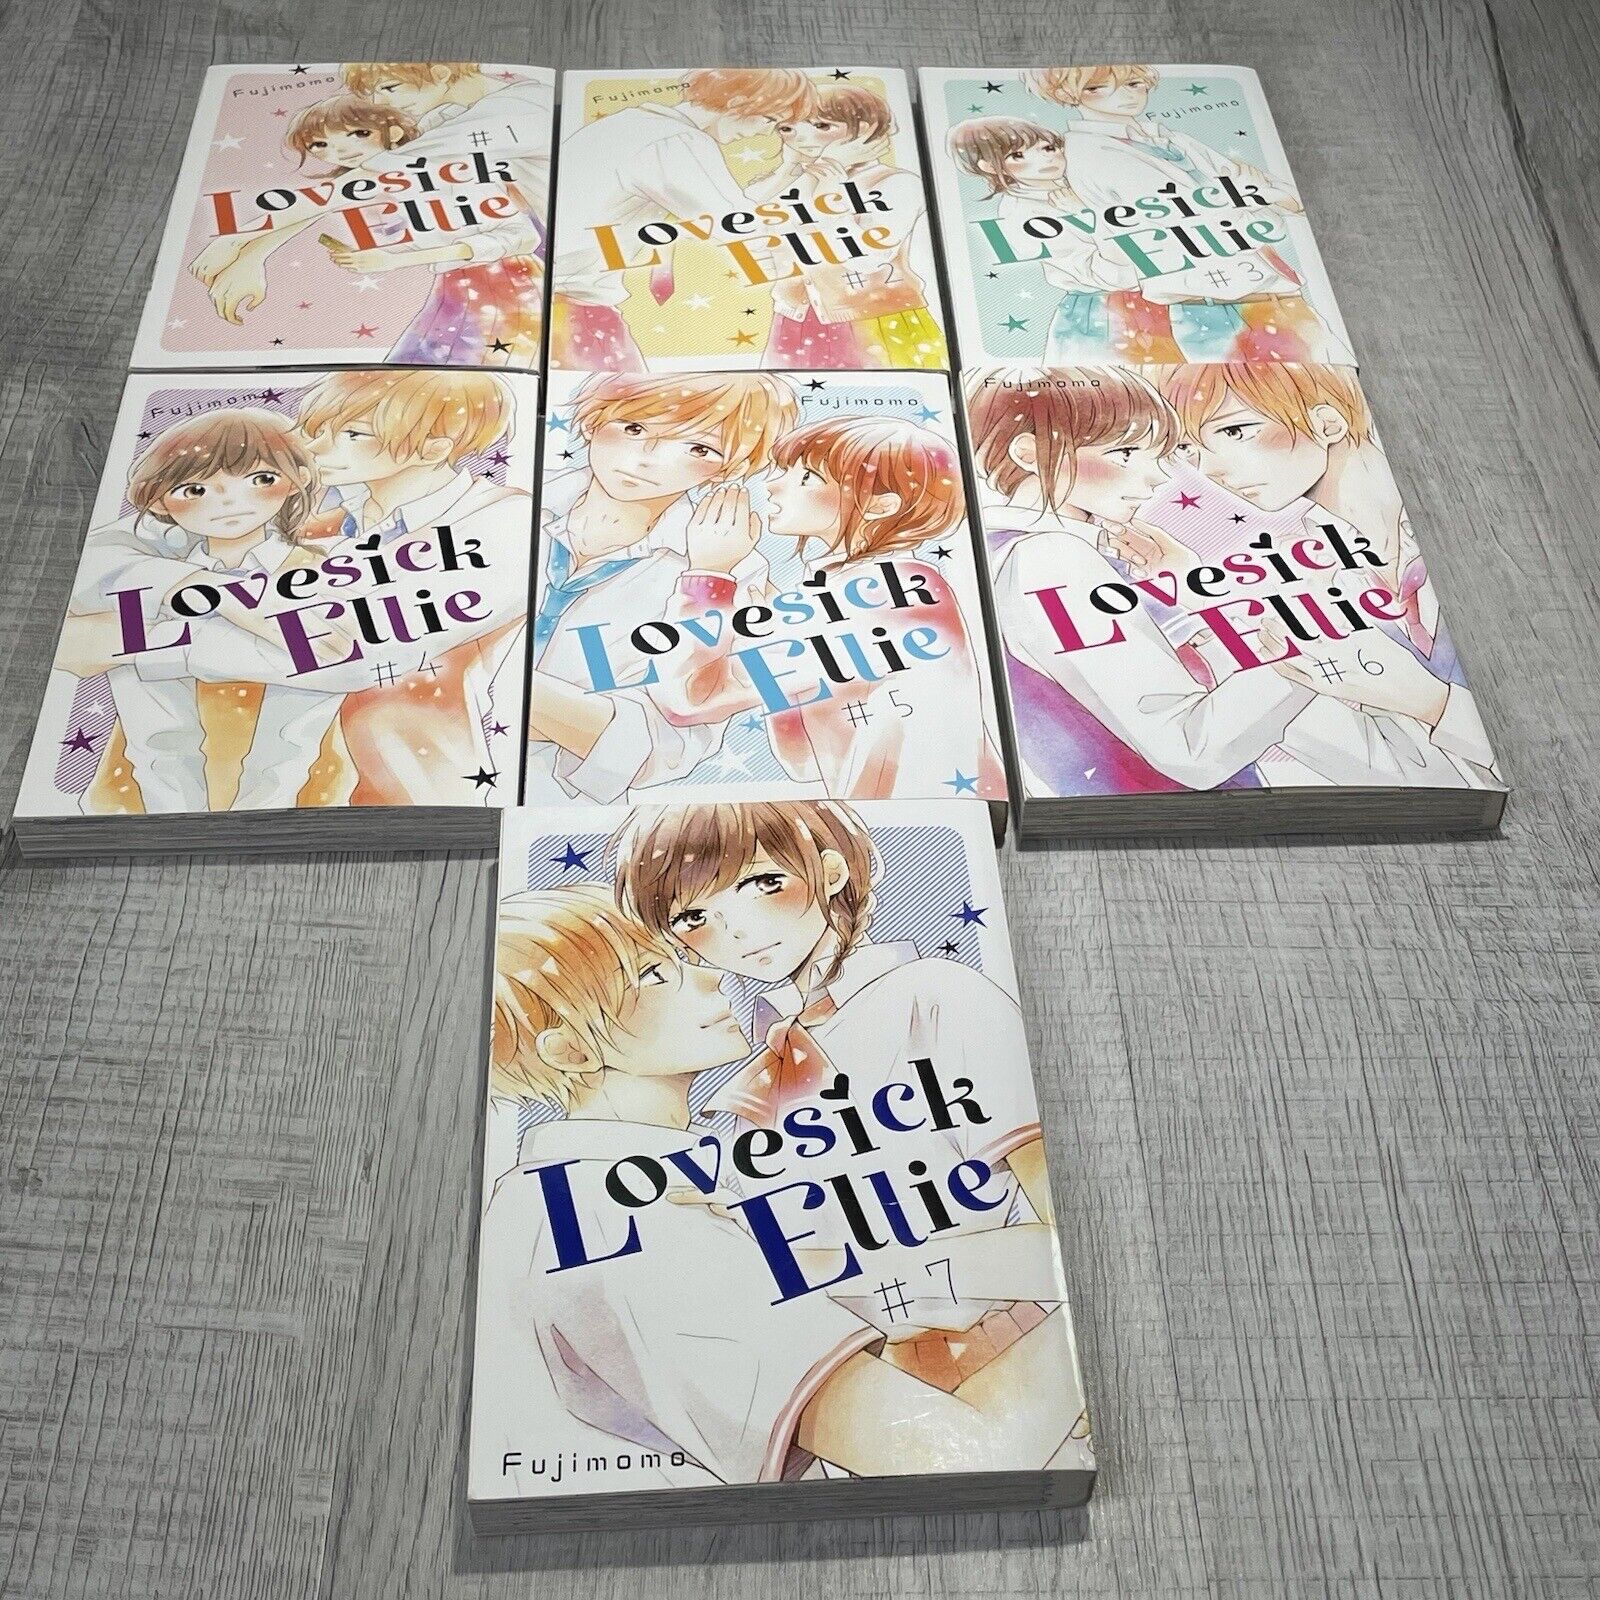 Lovesick Ellie Lot 7 Volumes 1-7 Fujimomo English Kodansha Ltd